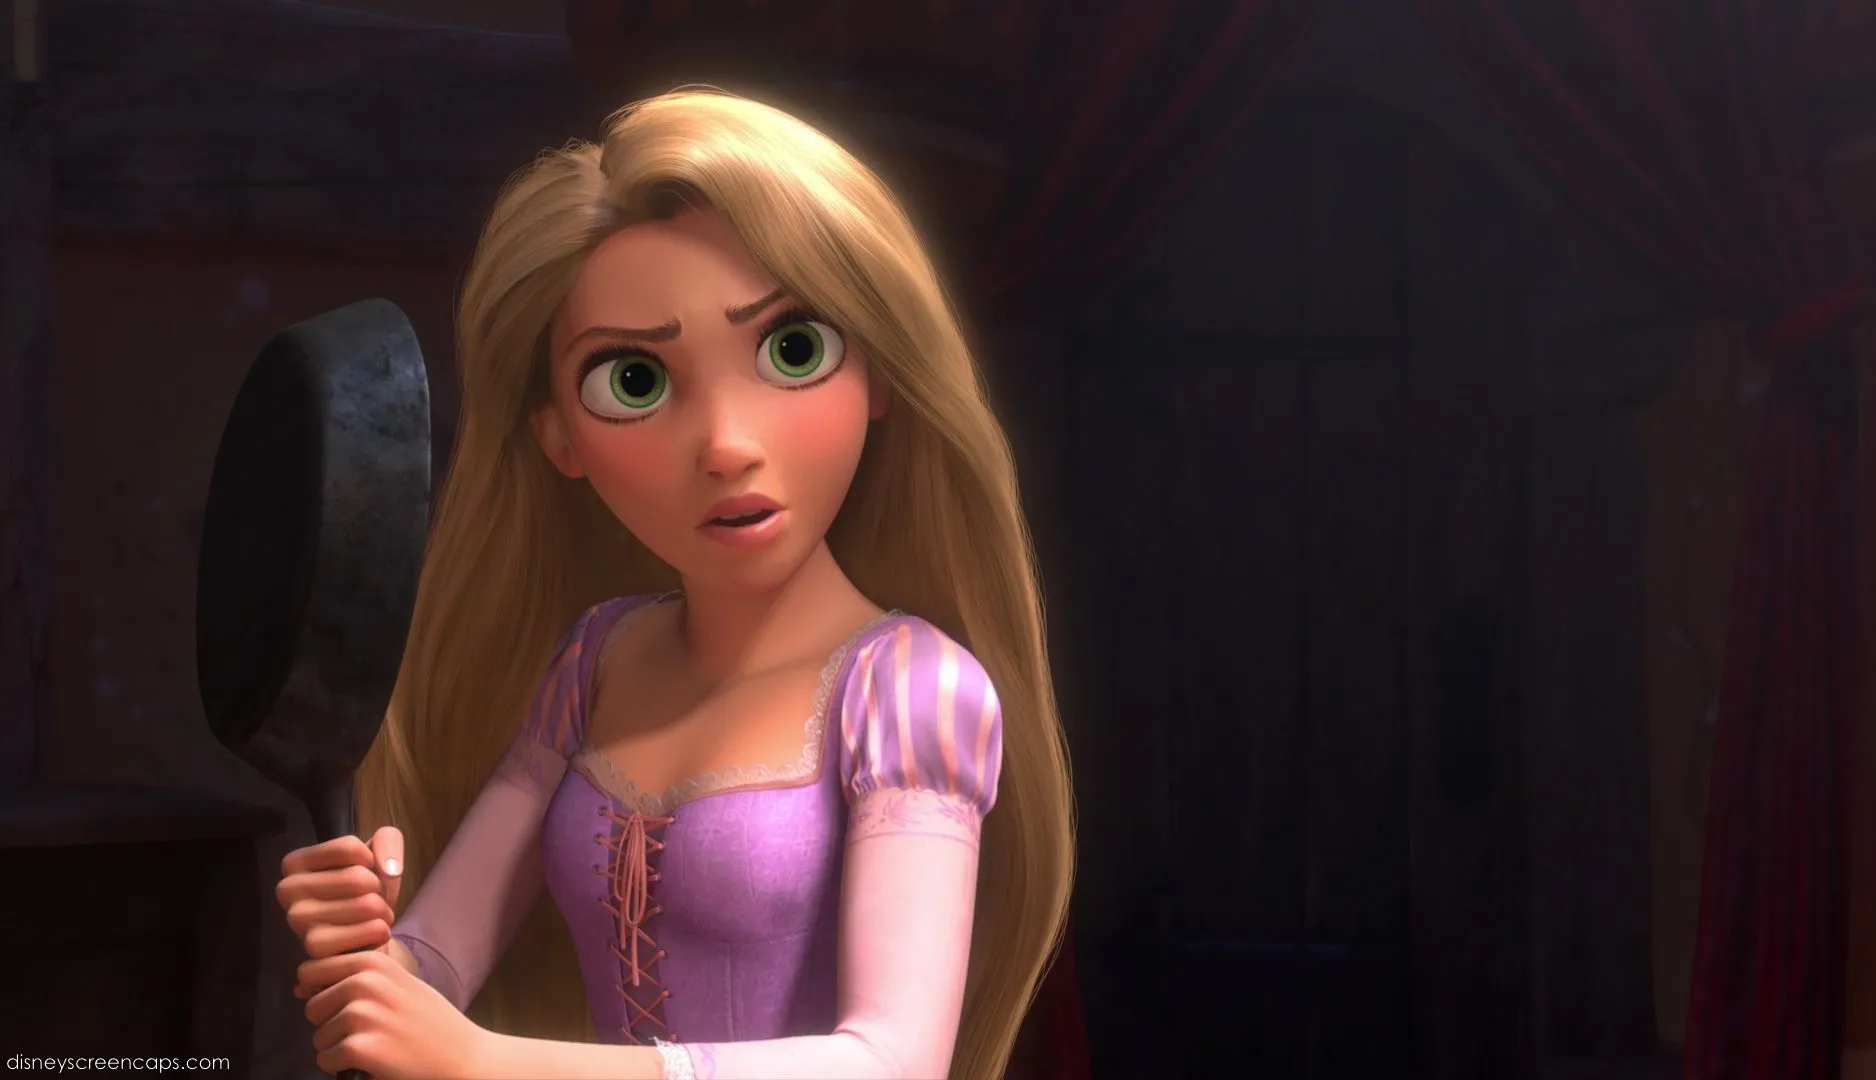 Image - Rapunzel 201.jpg - DisneyWiki